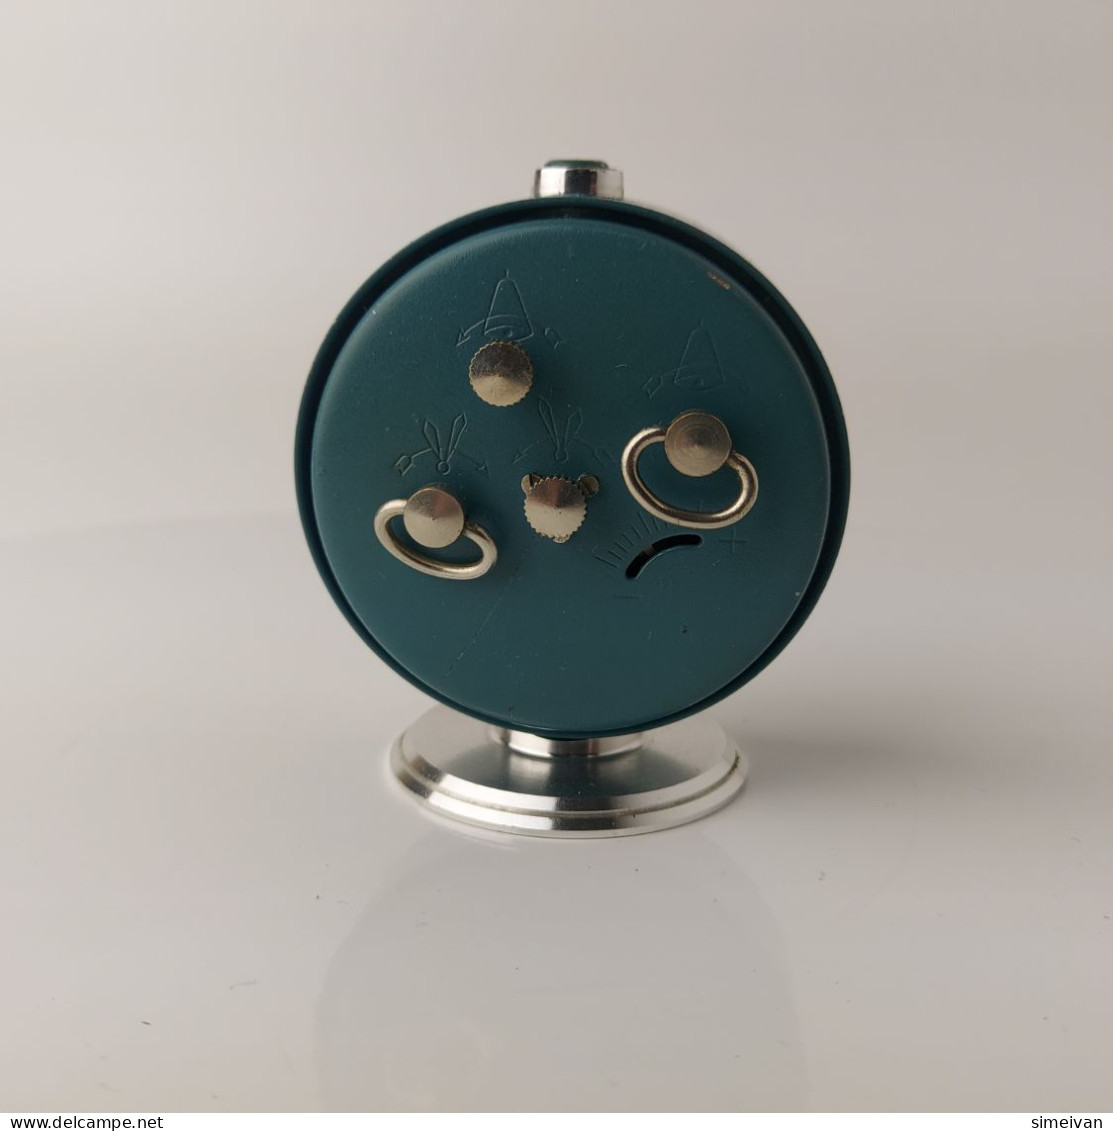 Vintage Mechanical Alarm Clock Slava 11 Jewels Russian Russia Soviet USSR  #5556 - Wekkers